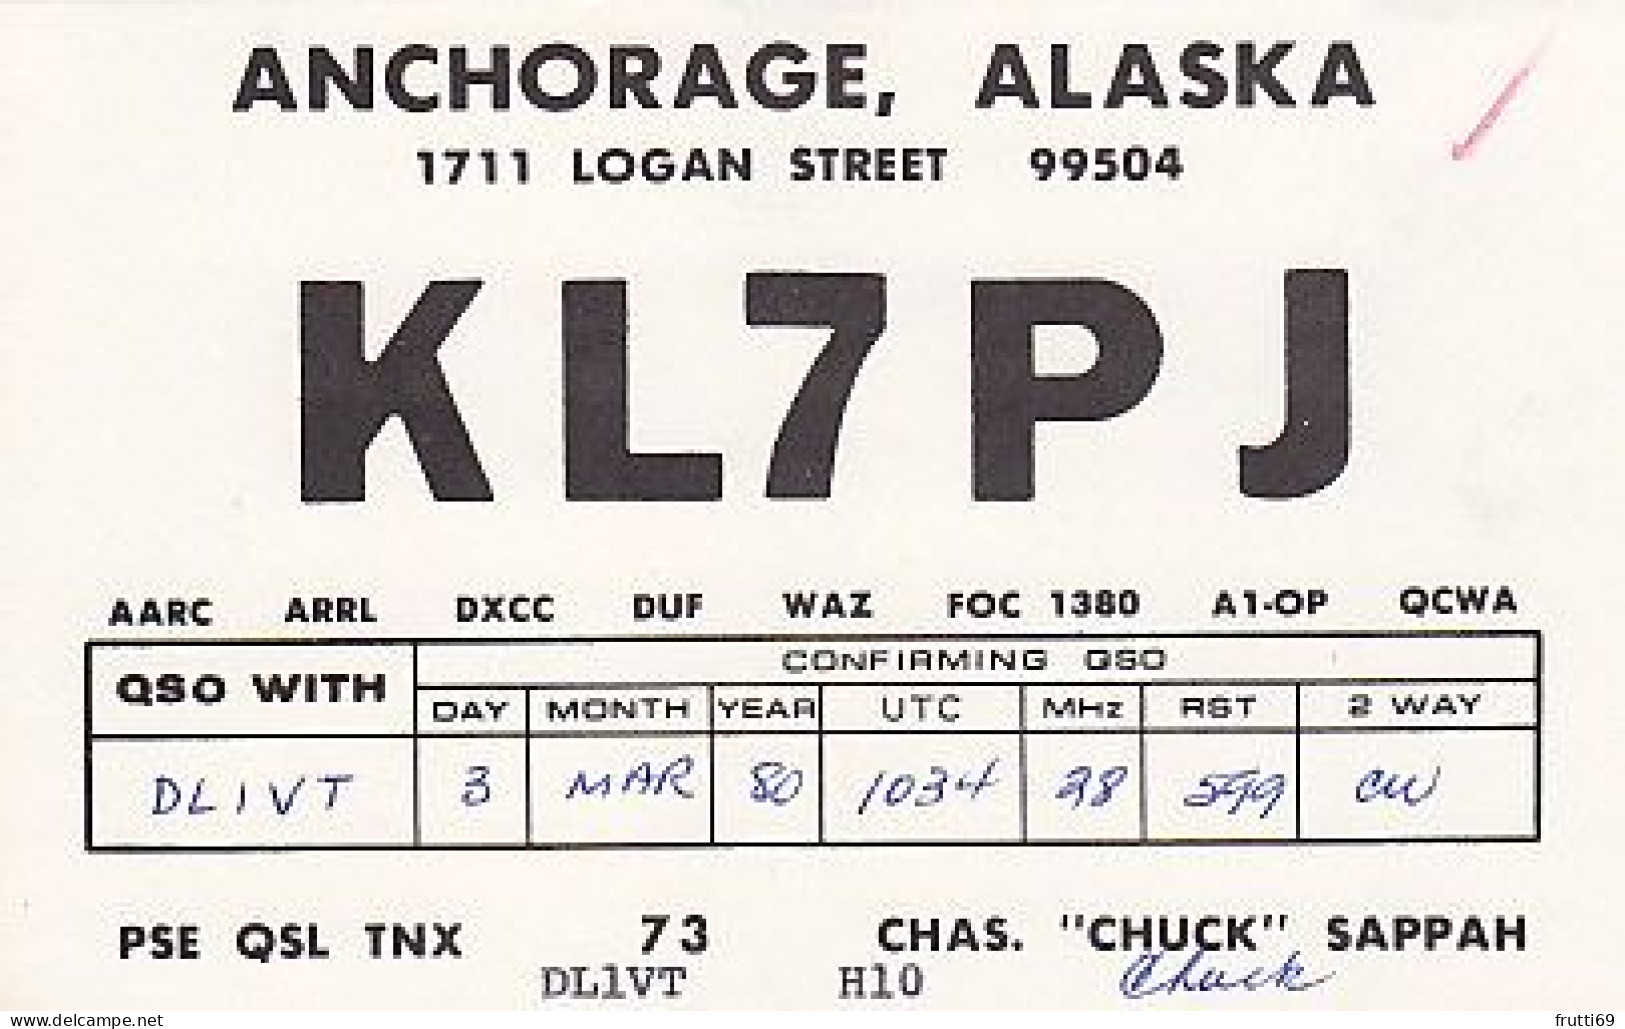 AK 183627 USA - Alaska - Anchorage - Radio Amateur